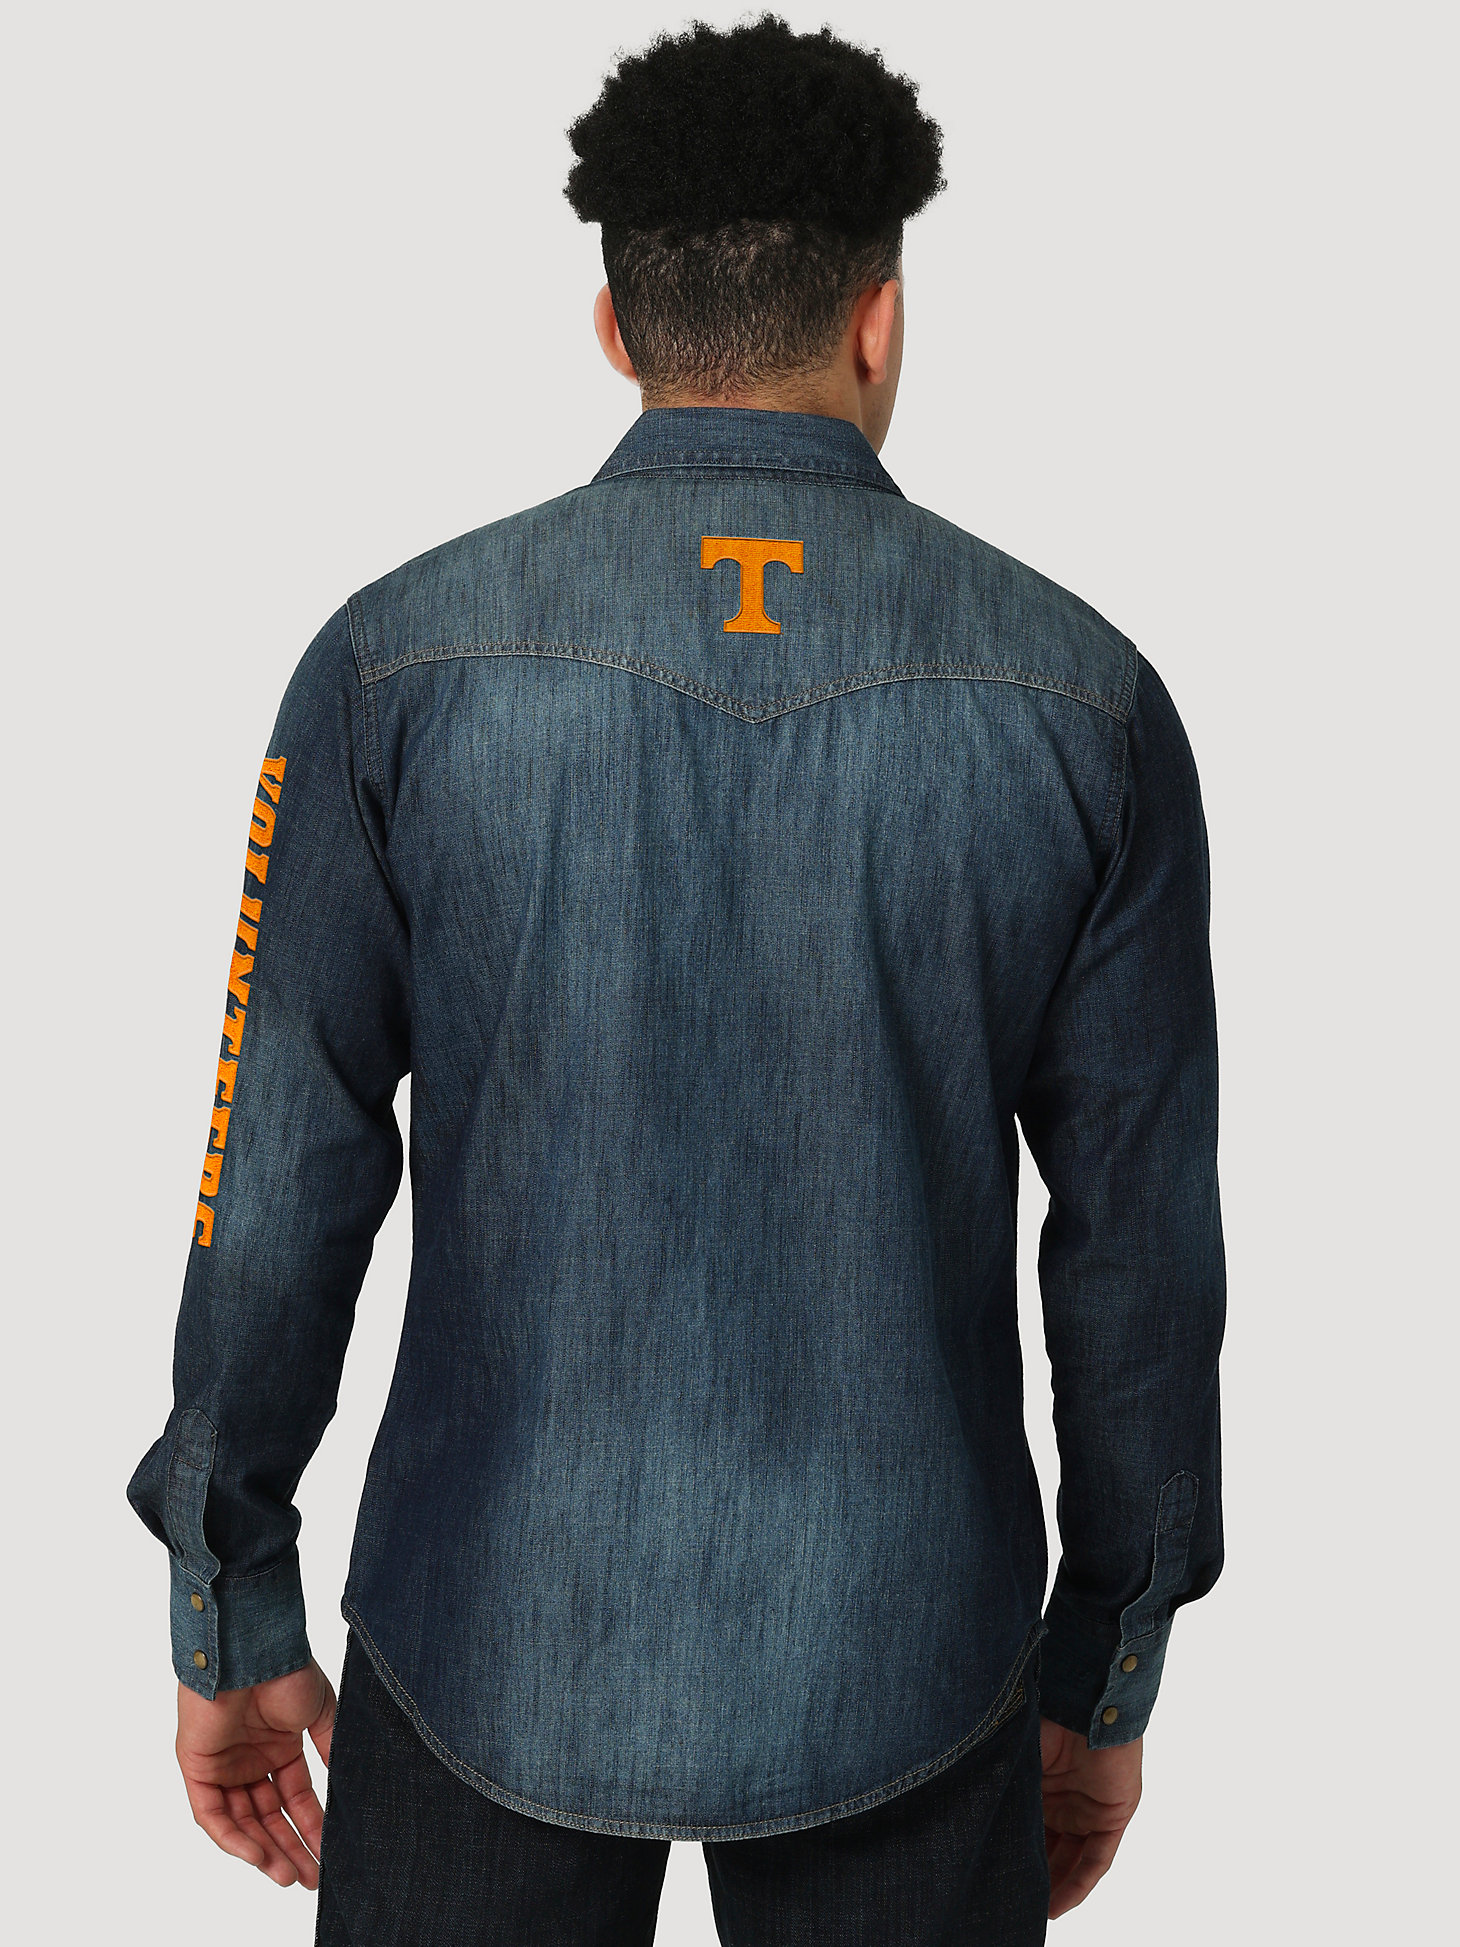 Men's Wrangler Collegiate Denim Western Snap Shirt in University of Tennessee main view